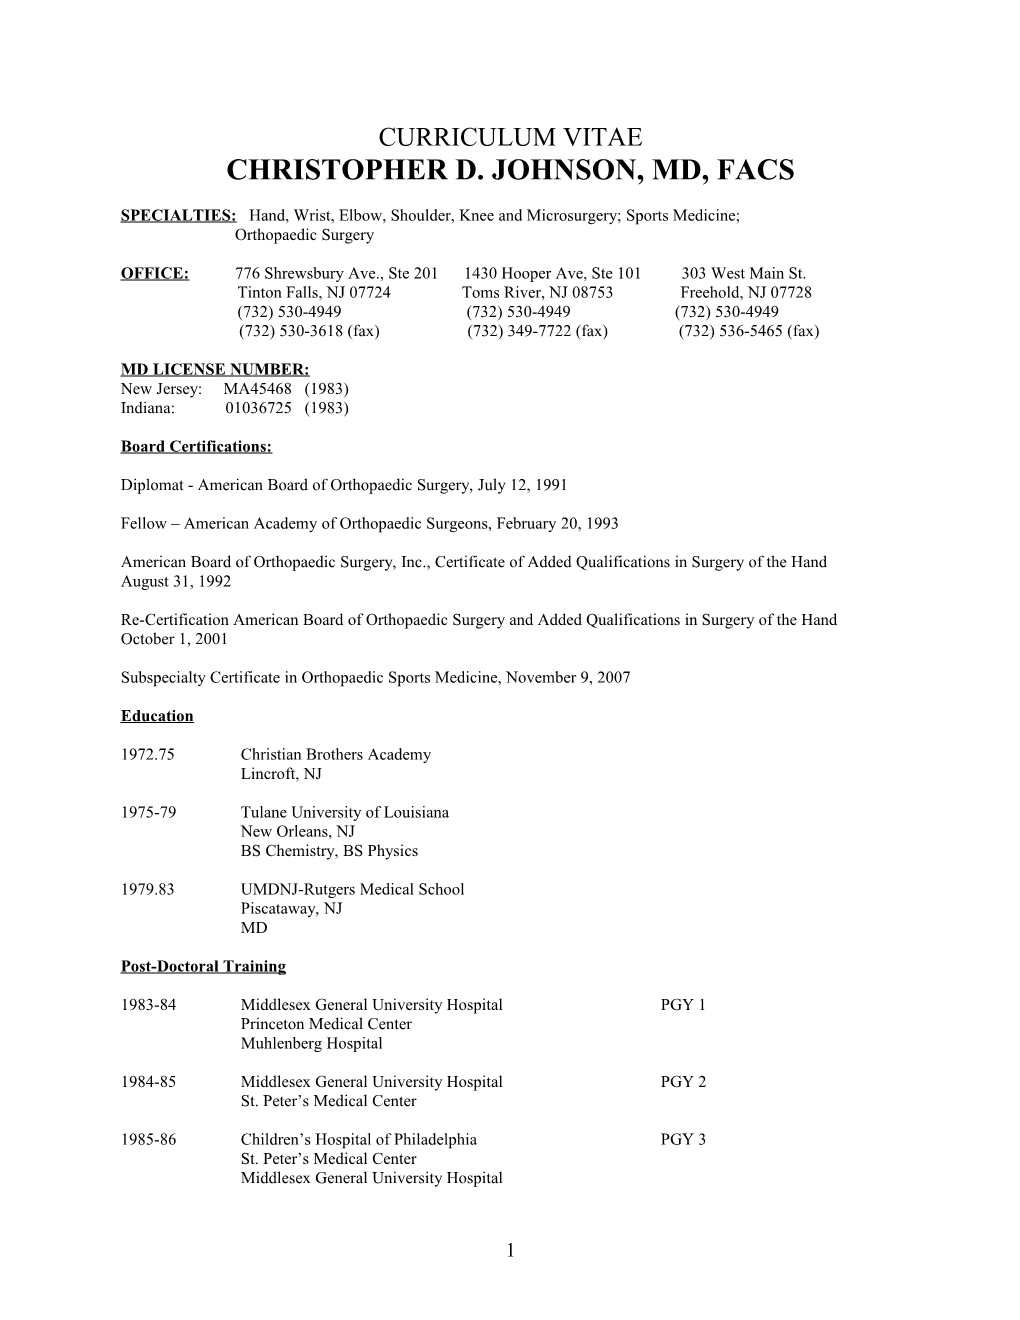 Christopher D. Johnson, Md, Facs